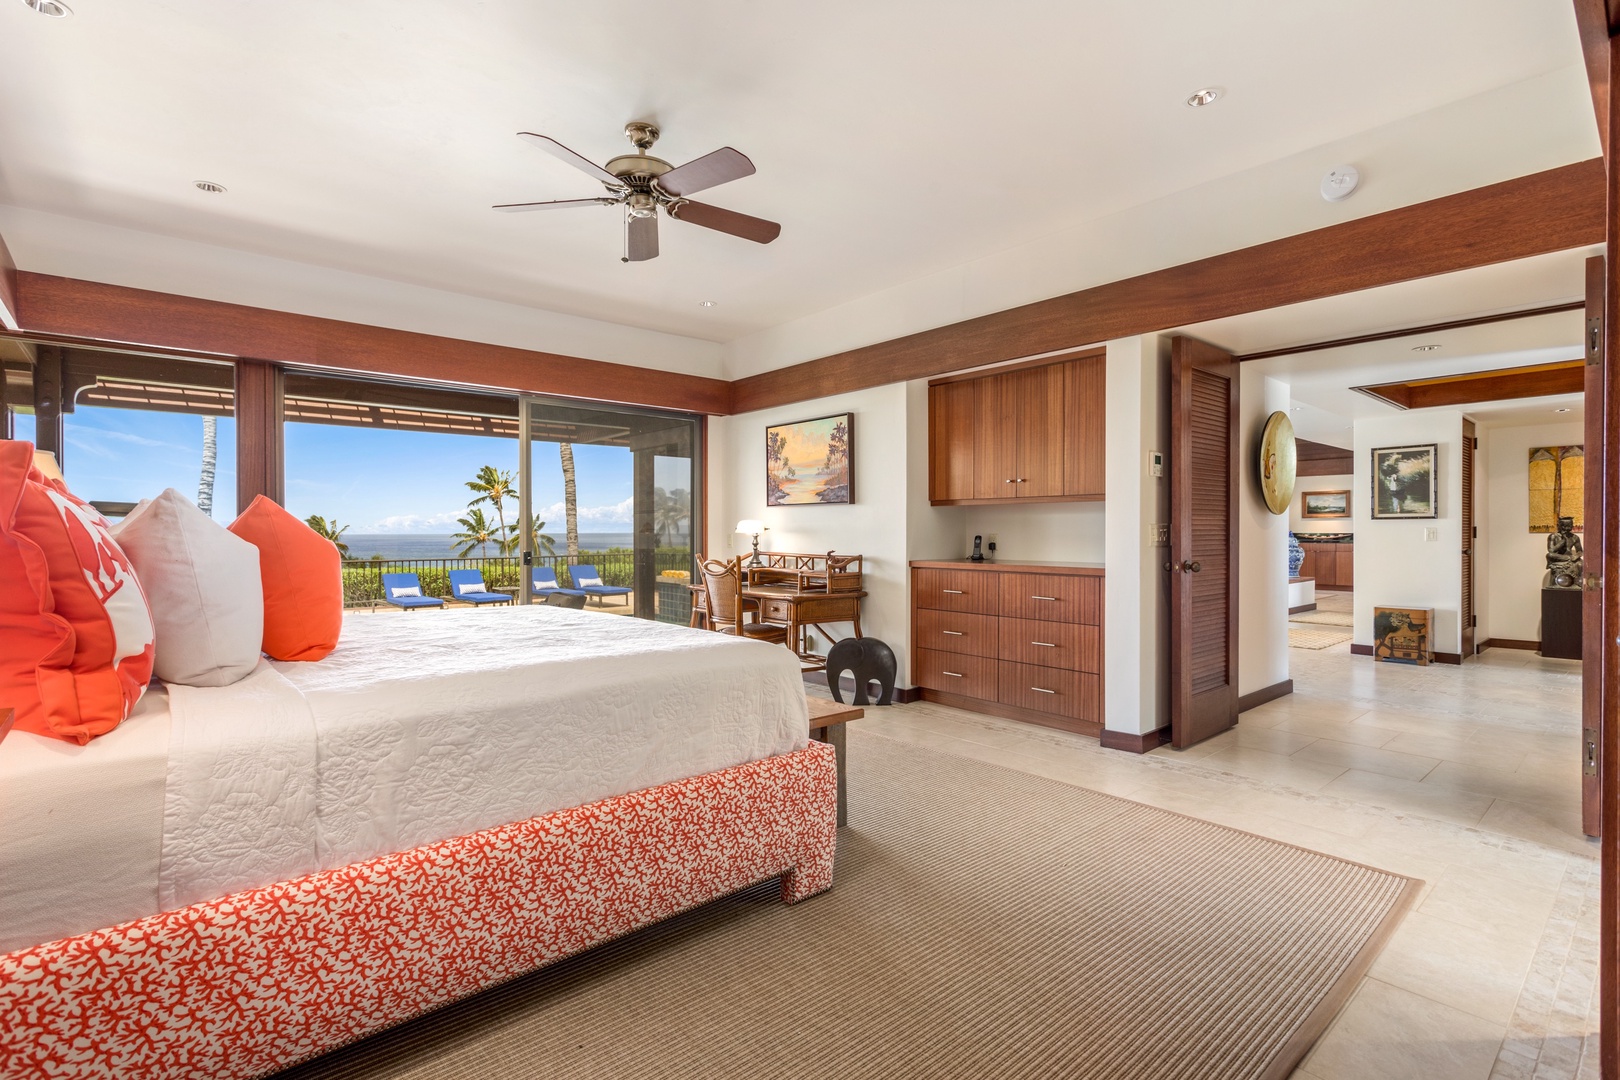 Kamuela Vacation Rentals, 3BD Villas (39) at Mauna Kea Resort - Primary bedroom alternate view, showcasing double entry doors and discreet TV cabinet.